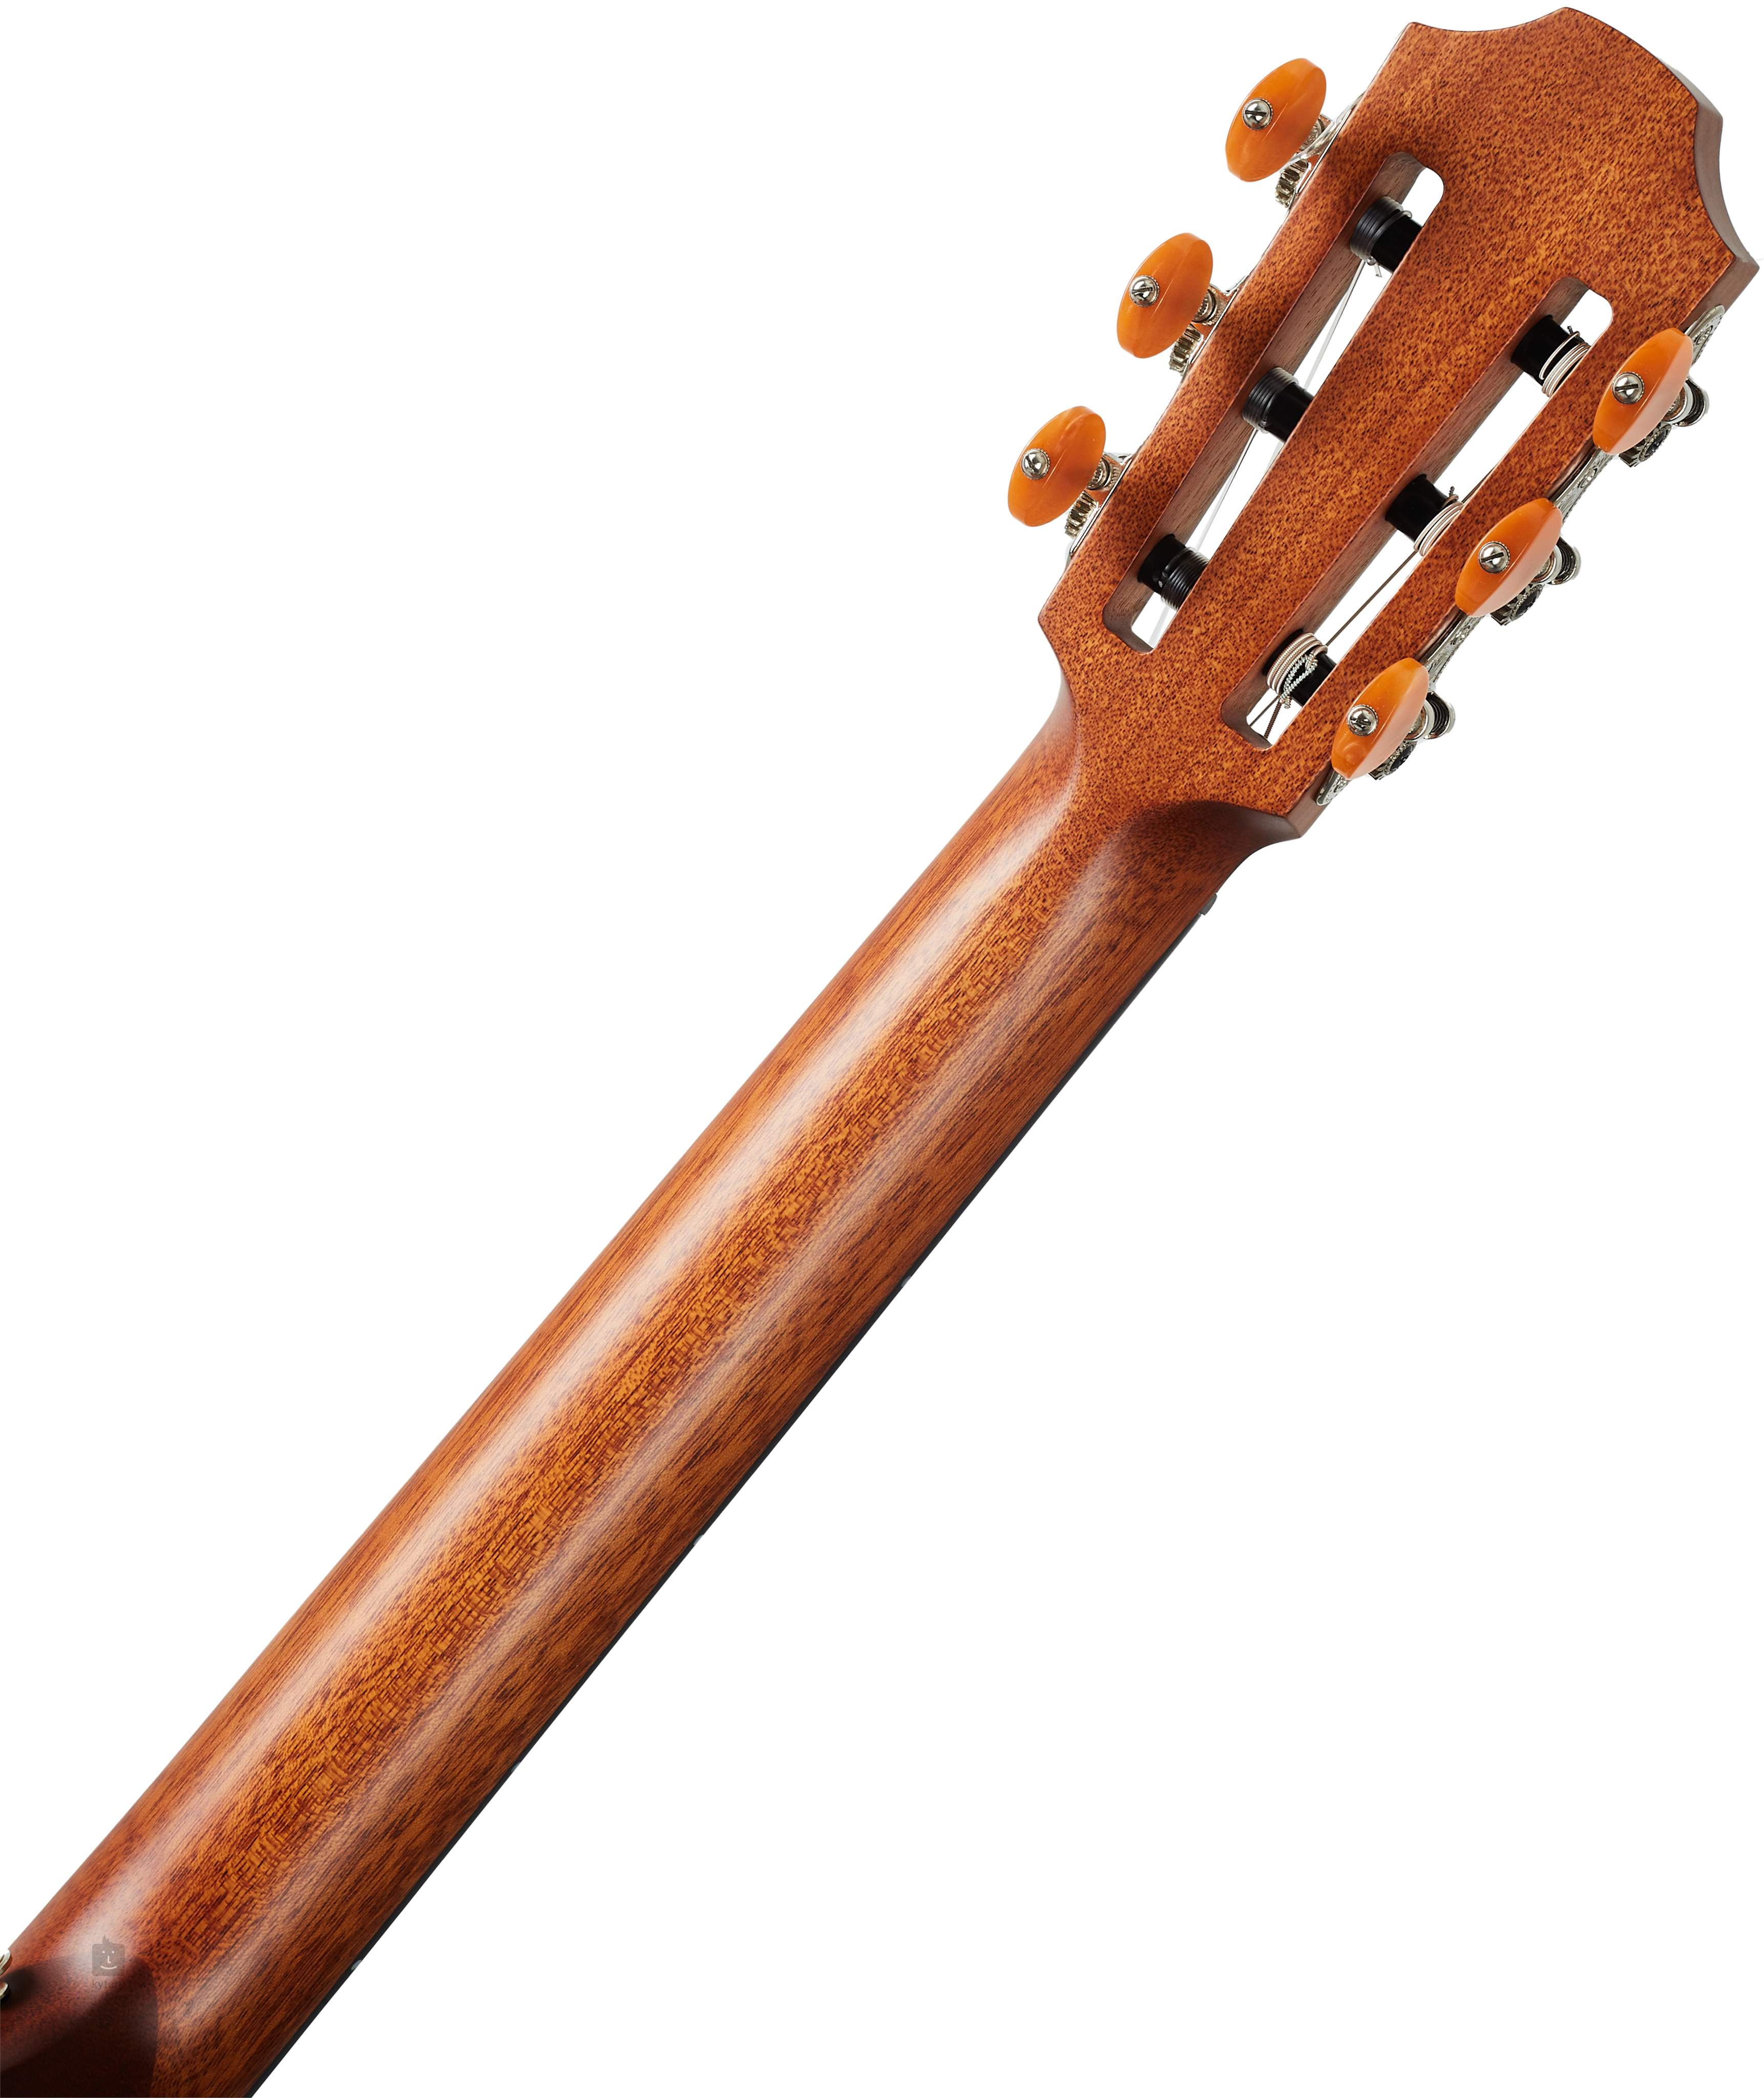 Furch GNc 4-CR nylon-string guitar - Furch Guitars